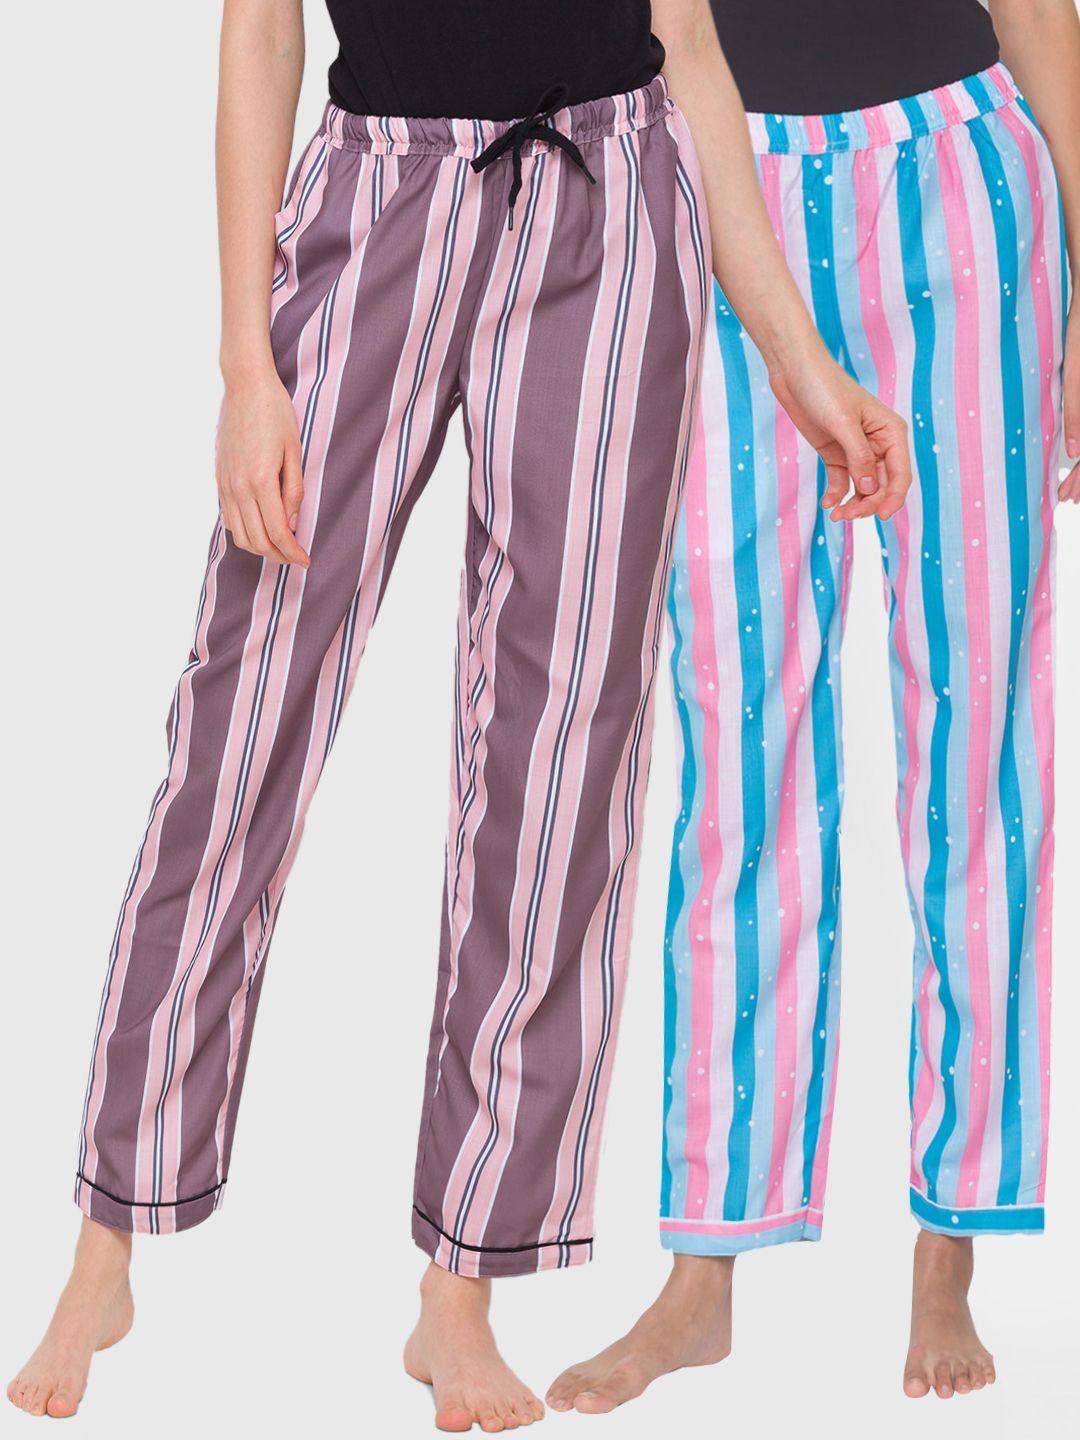 fashionrack women pack of 2 striped cotton lounge pants